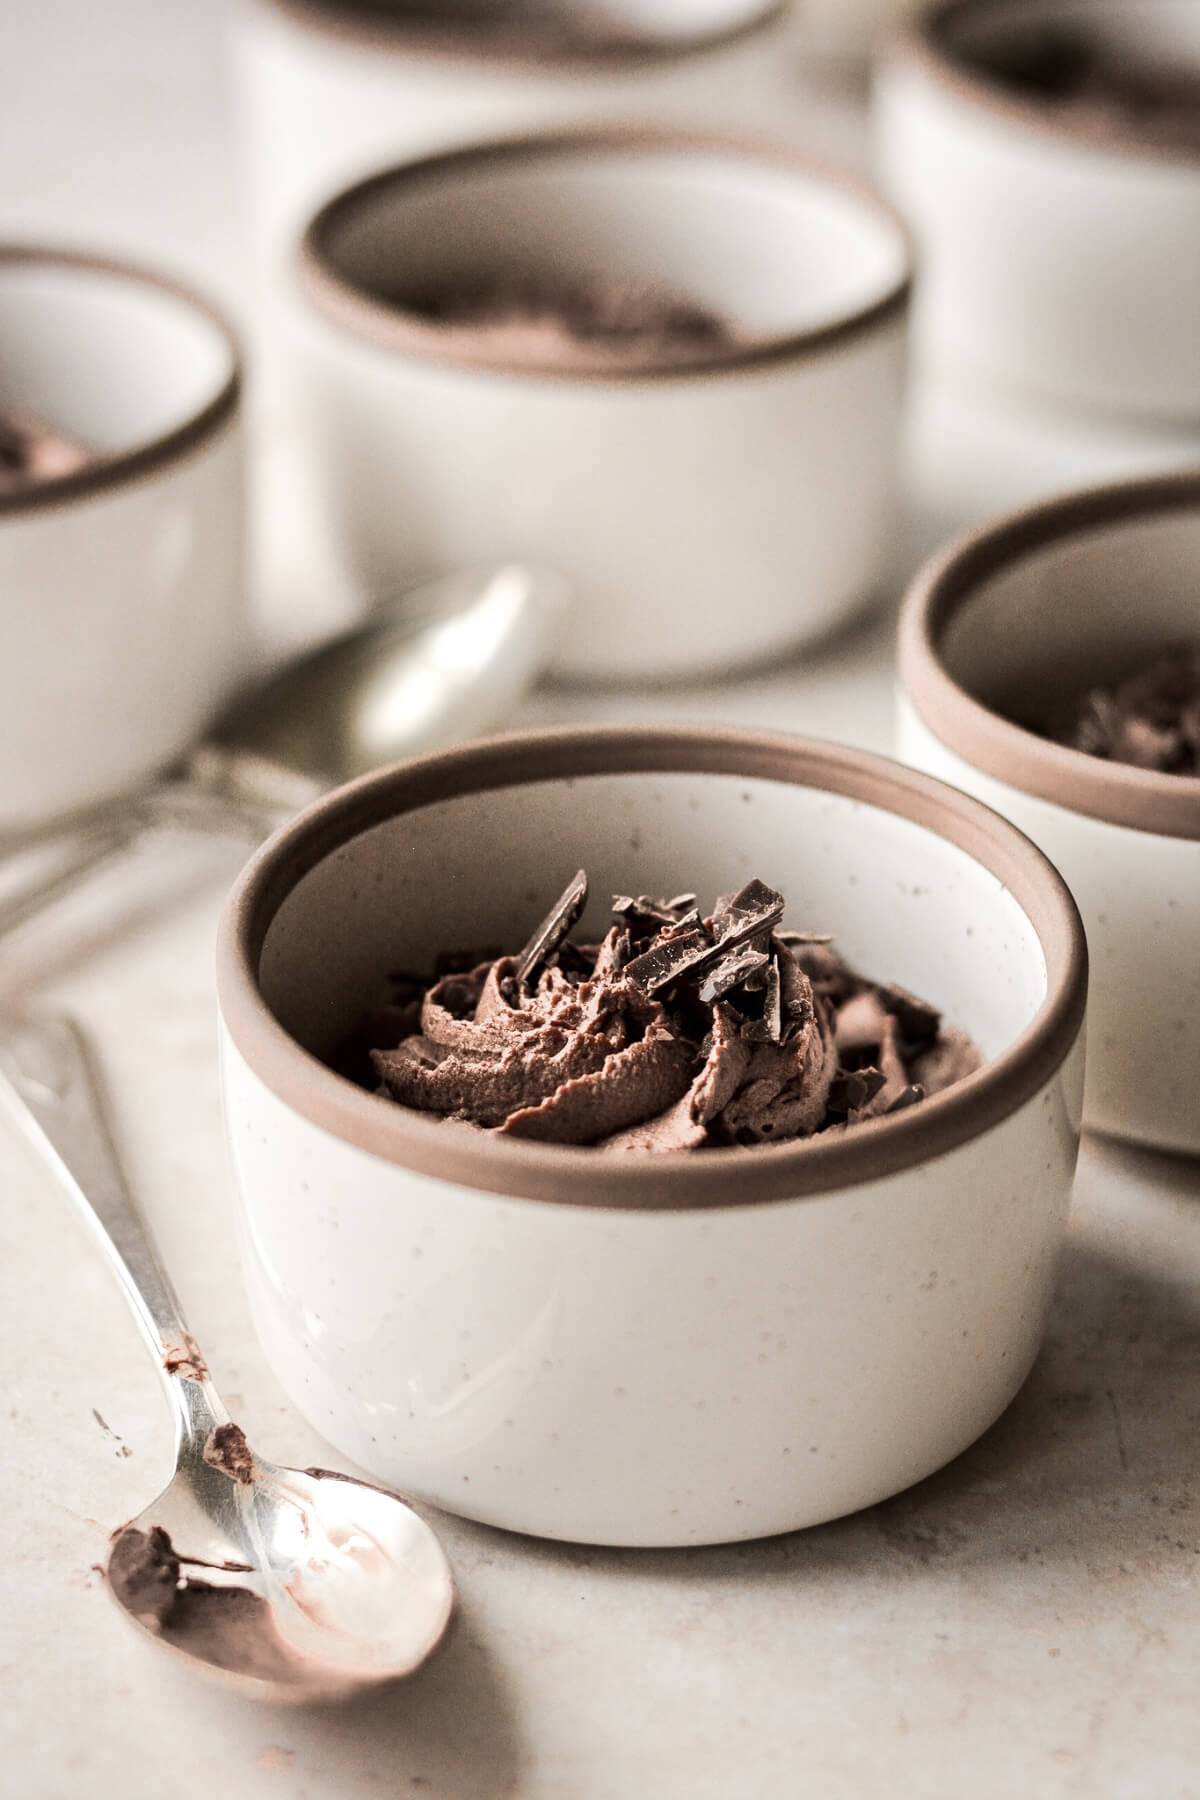 Chocolate espresso mousse in a ramekin.